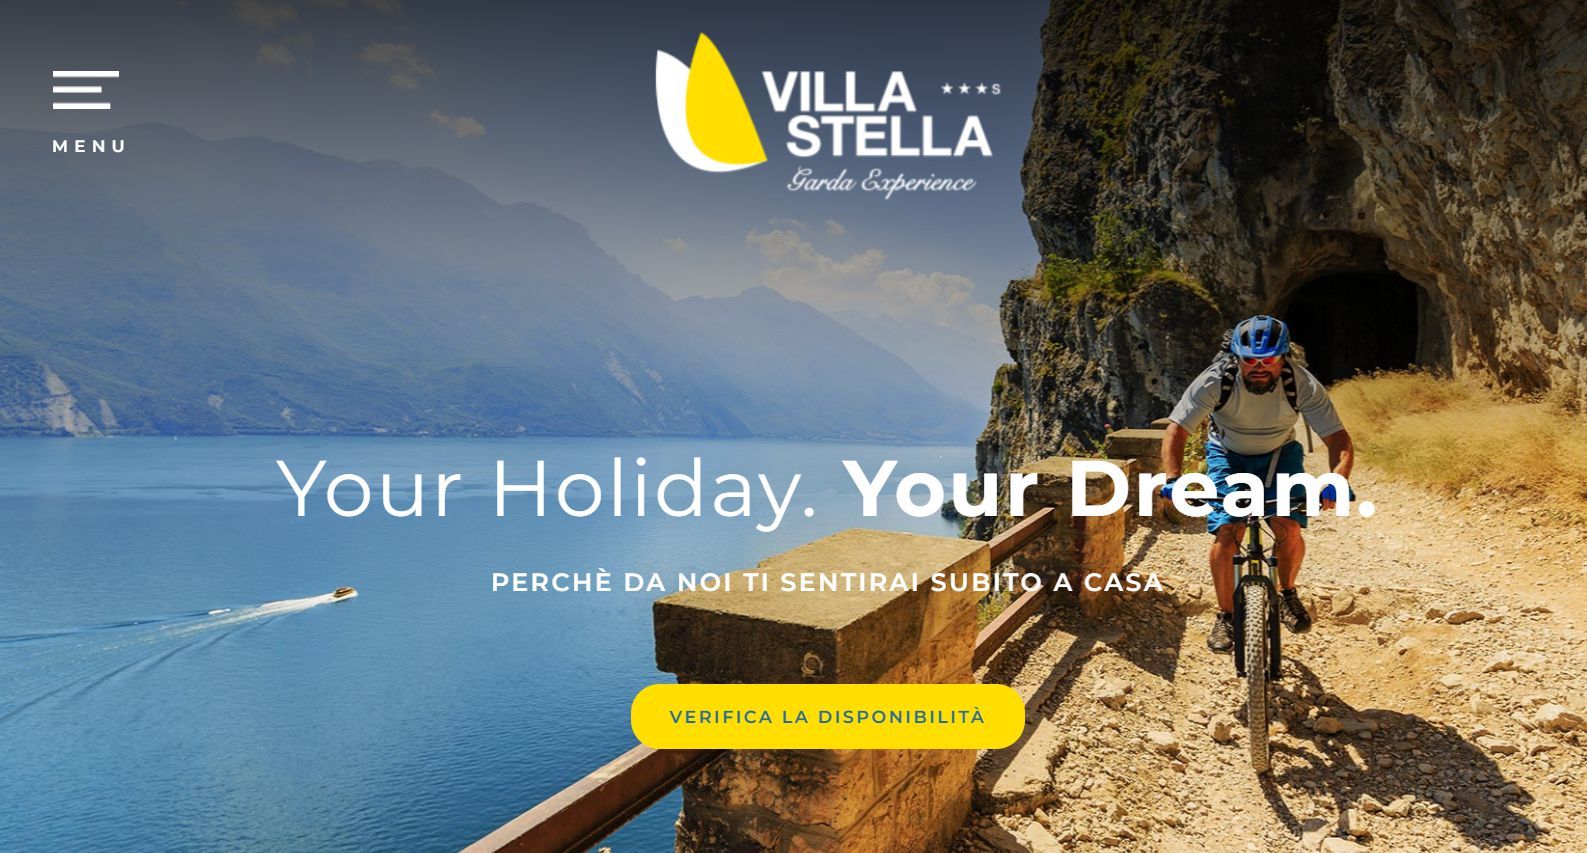 Hotel Villa Stella